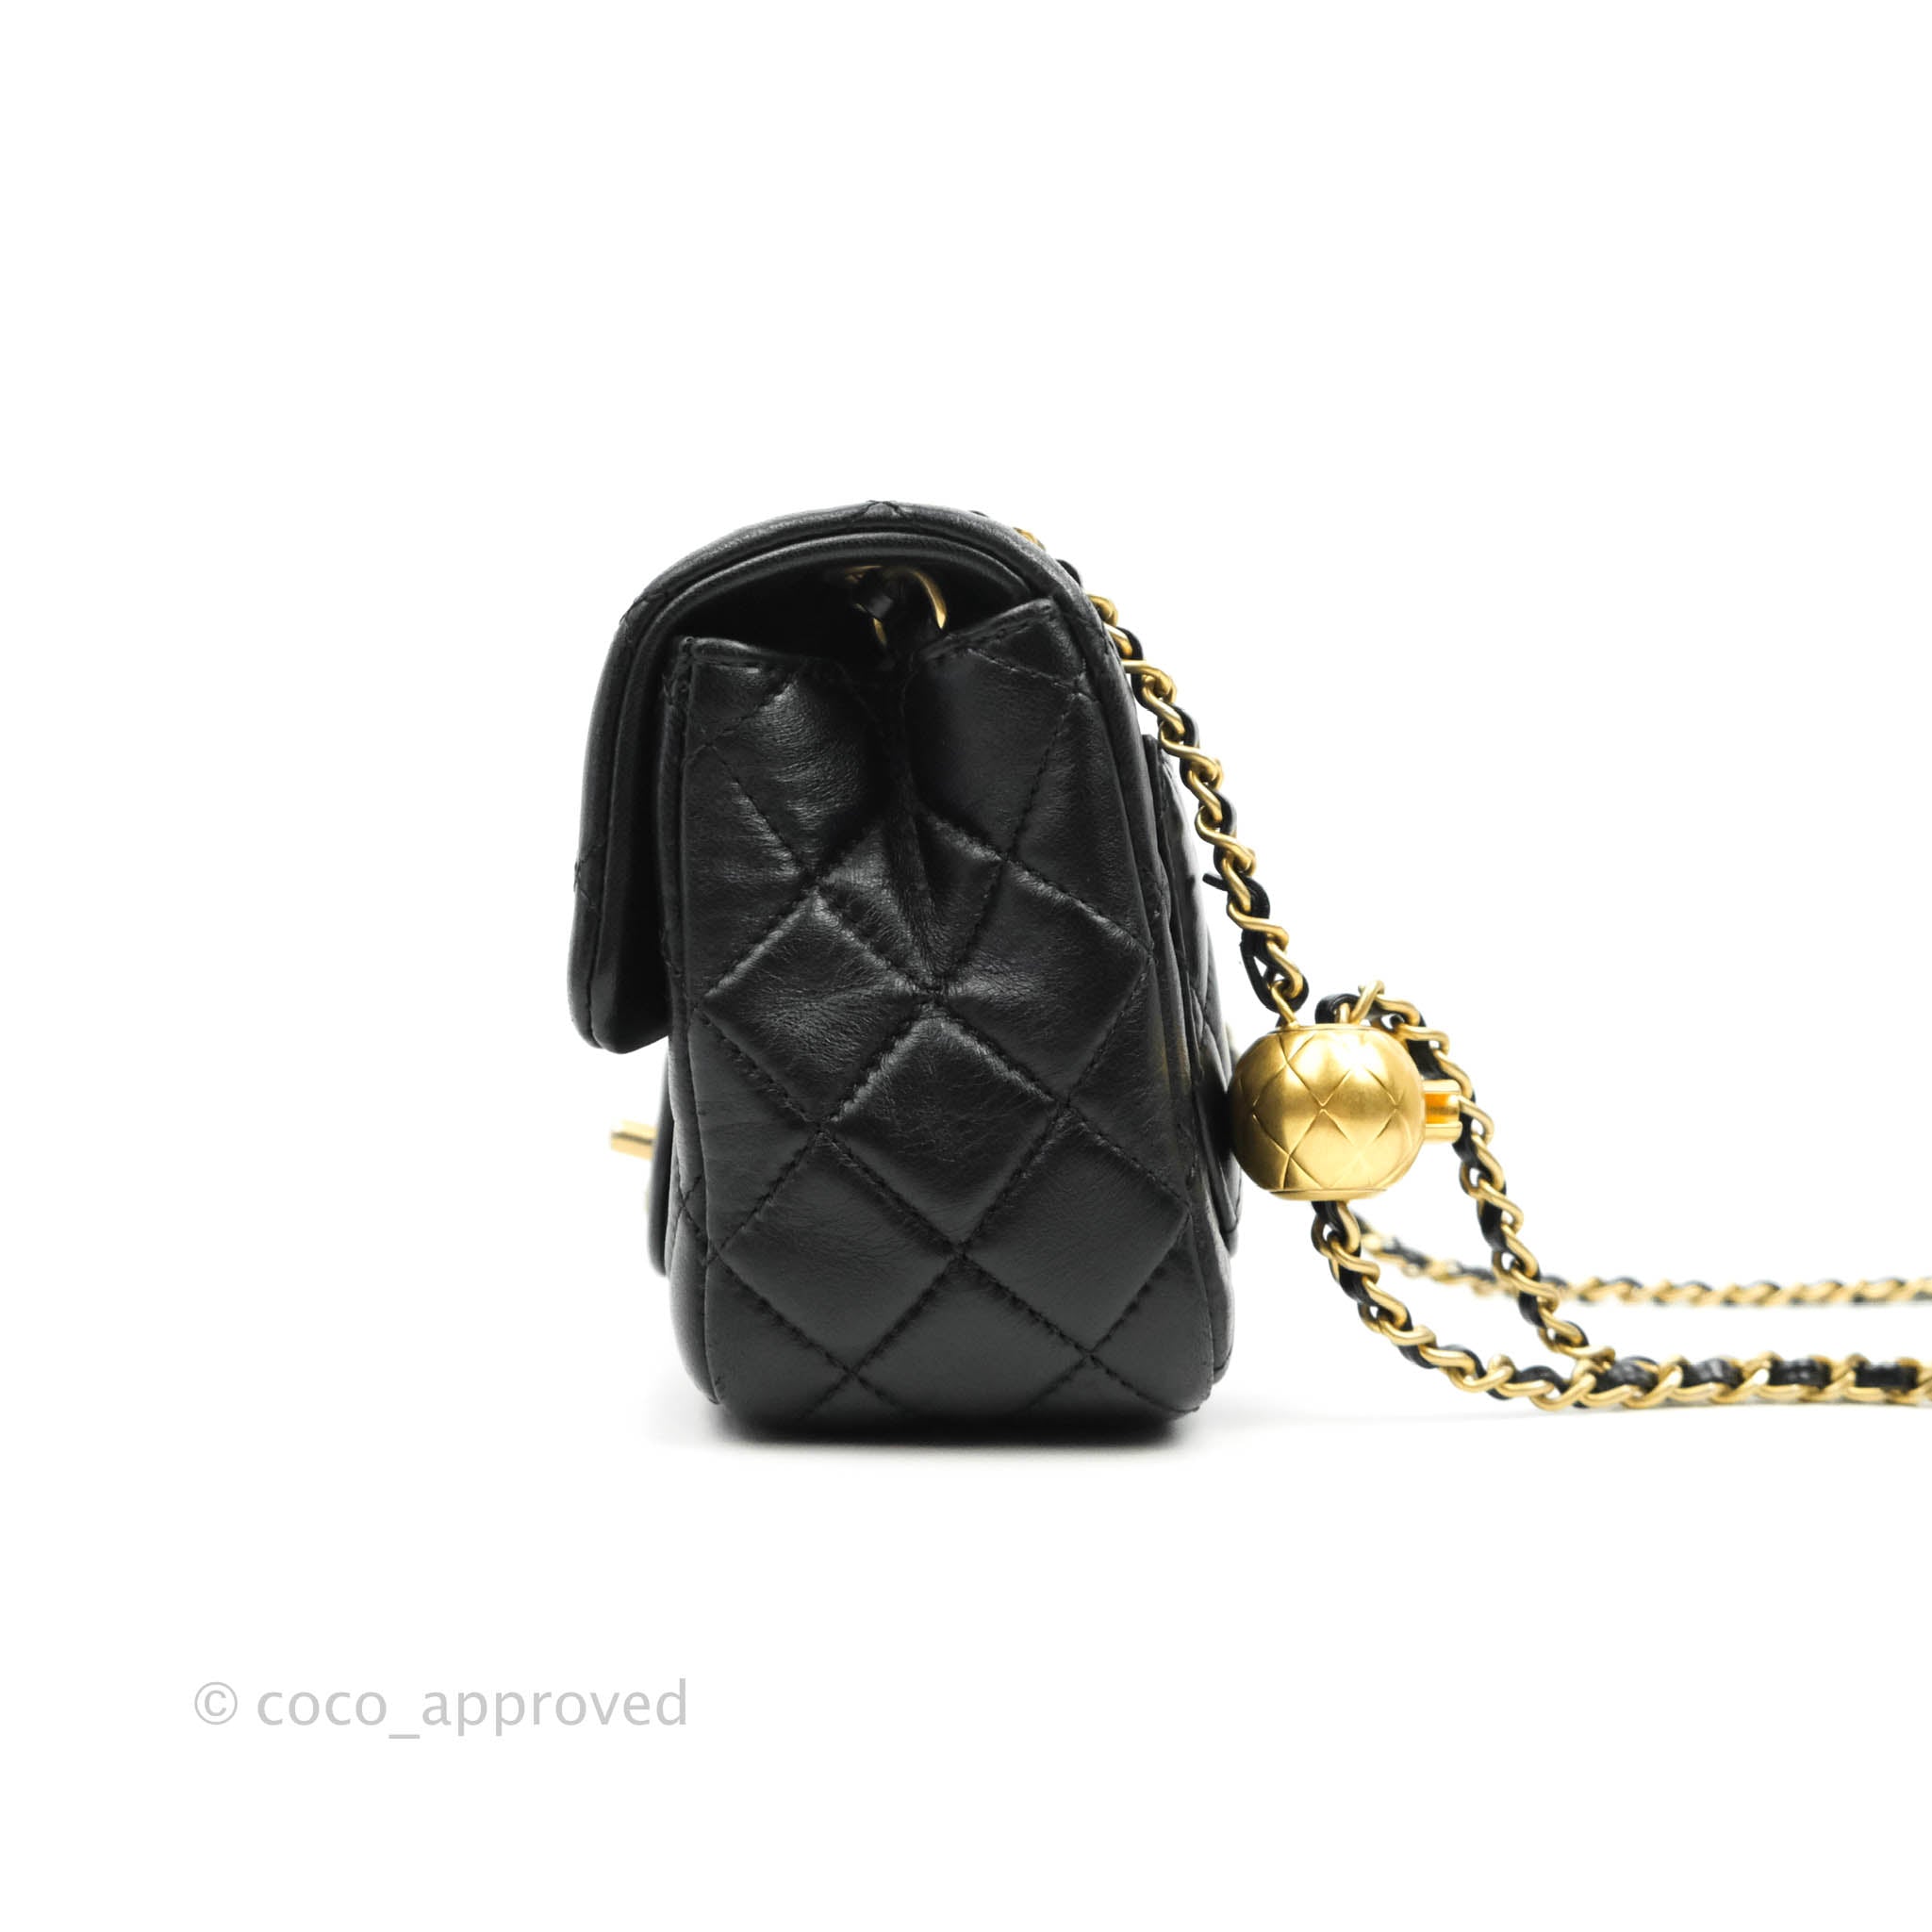 black and gold chanel handbag white